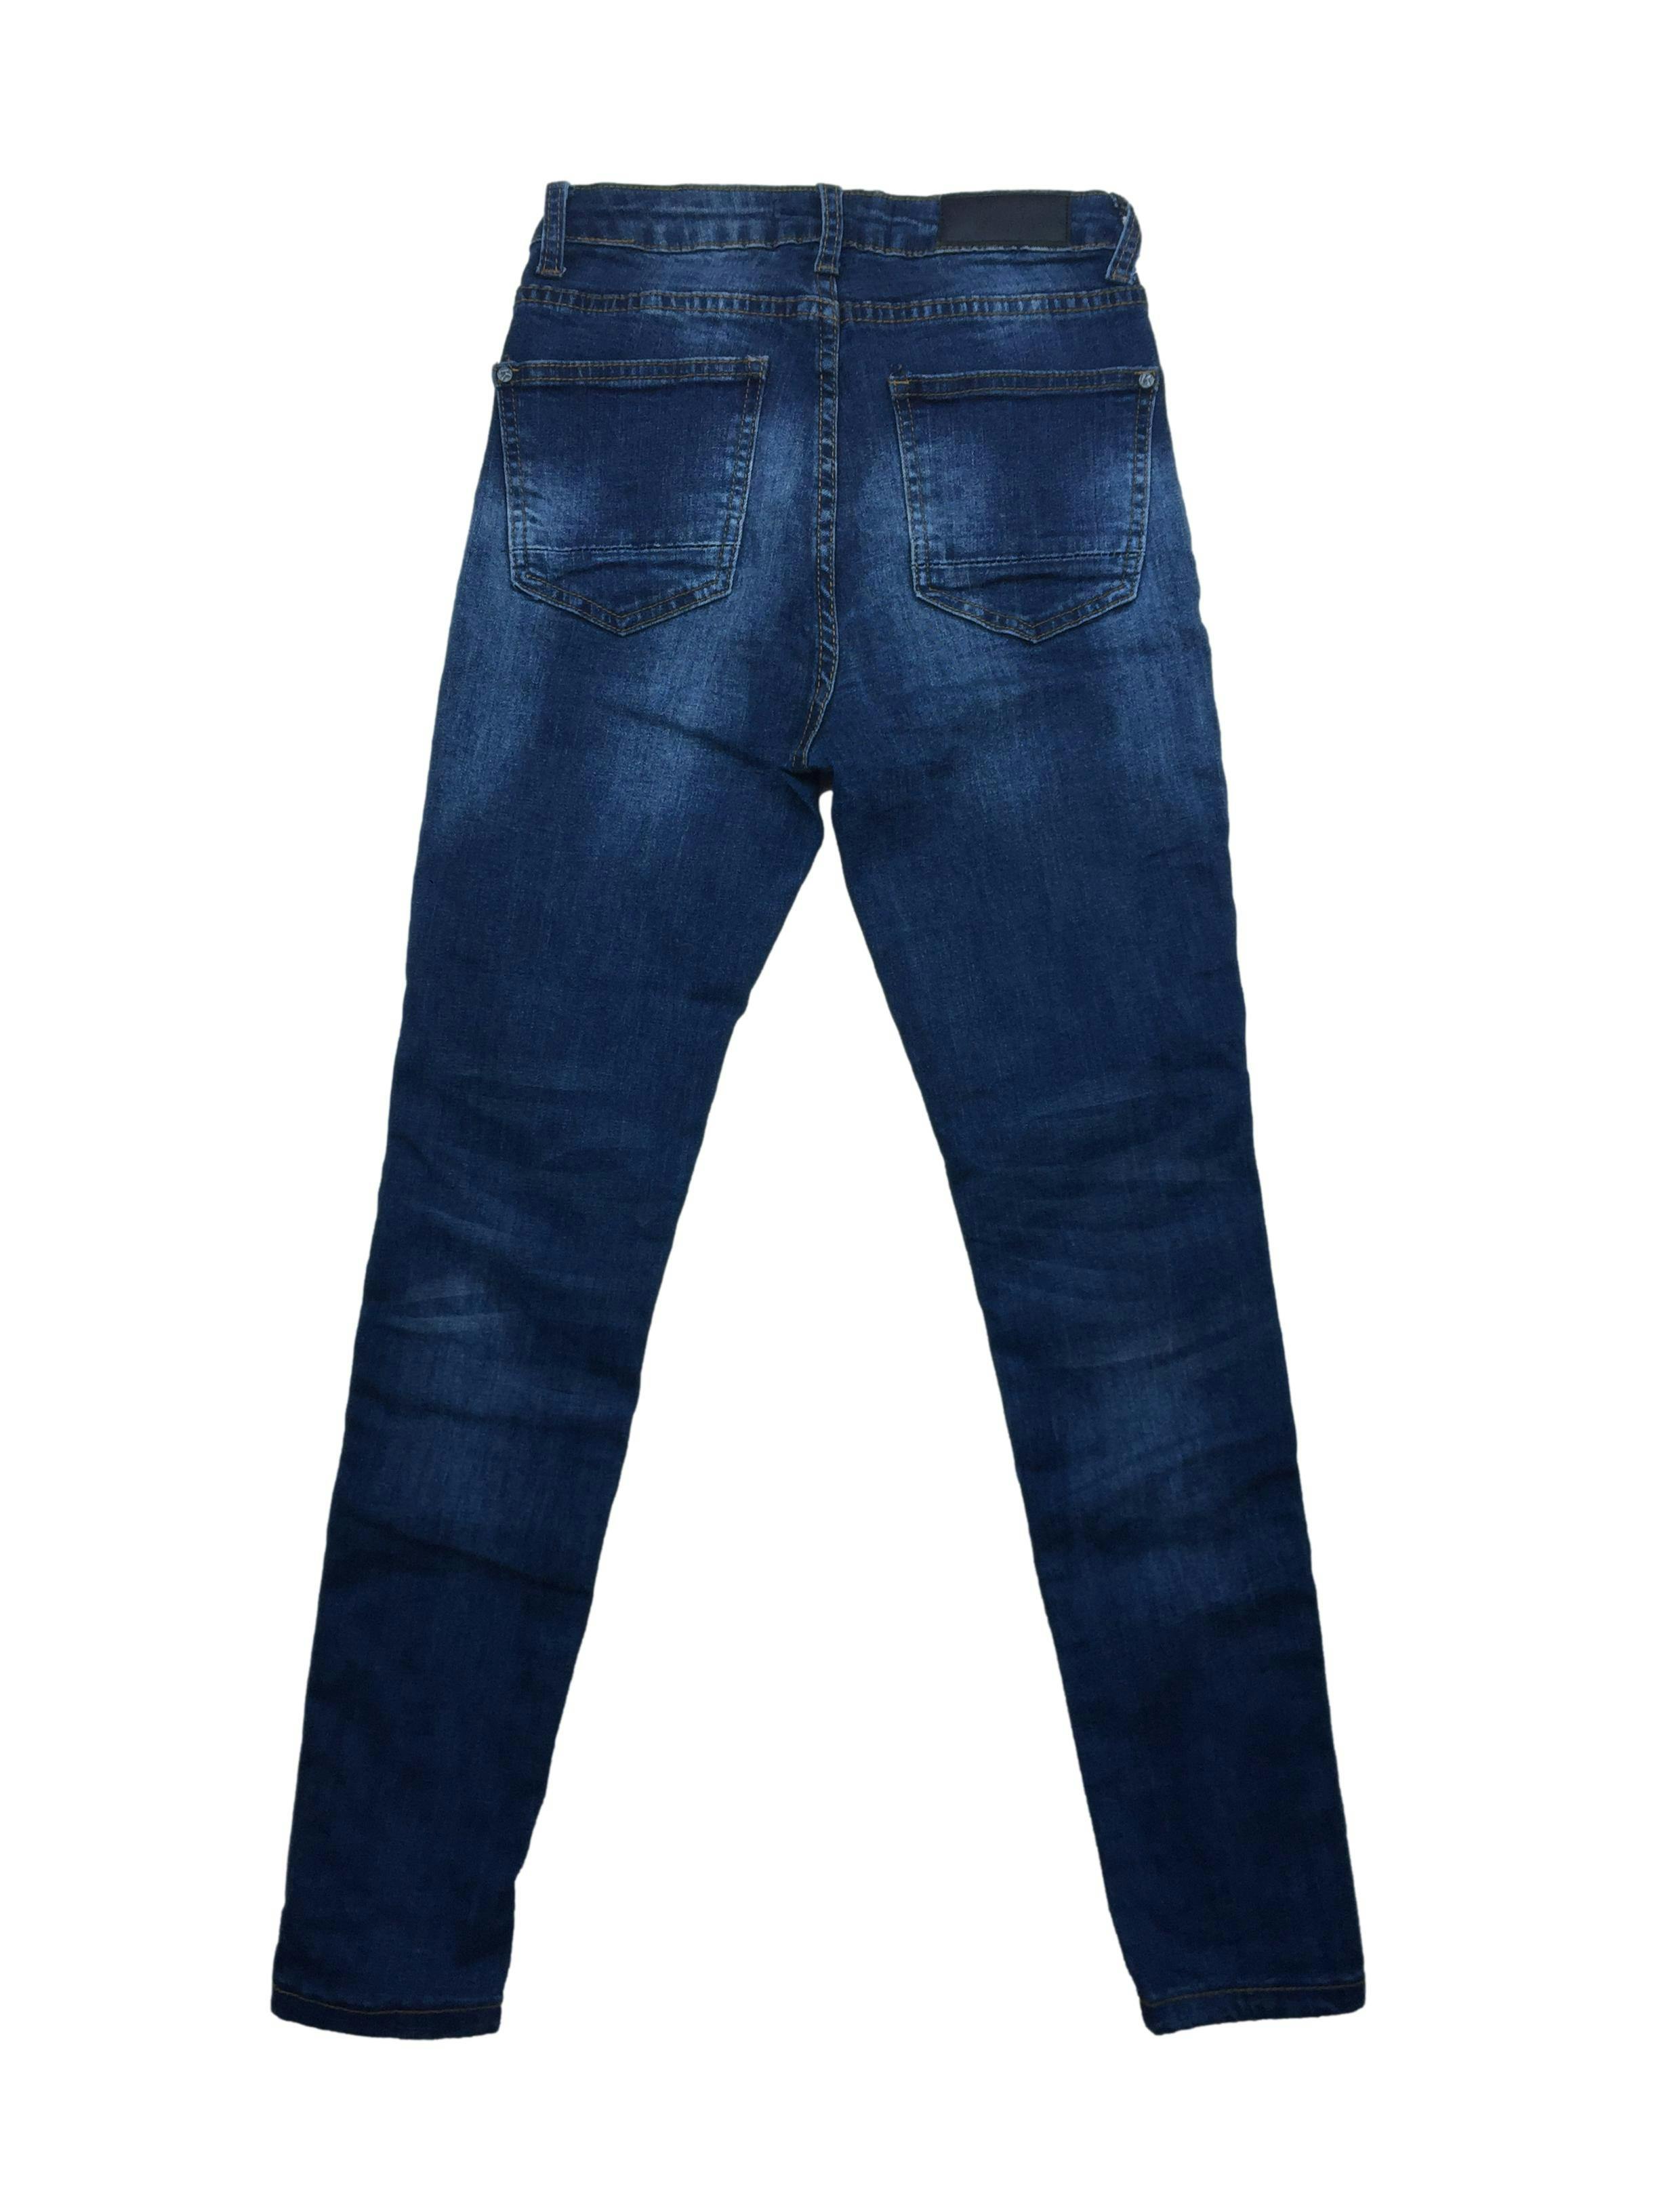 Skinny jean Karl Largerfeld for Falabella, delantero azul oscuro, five pockets. Cintura: 62cm, Tiro: 25cm, Largo: 90cm.